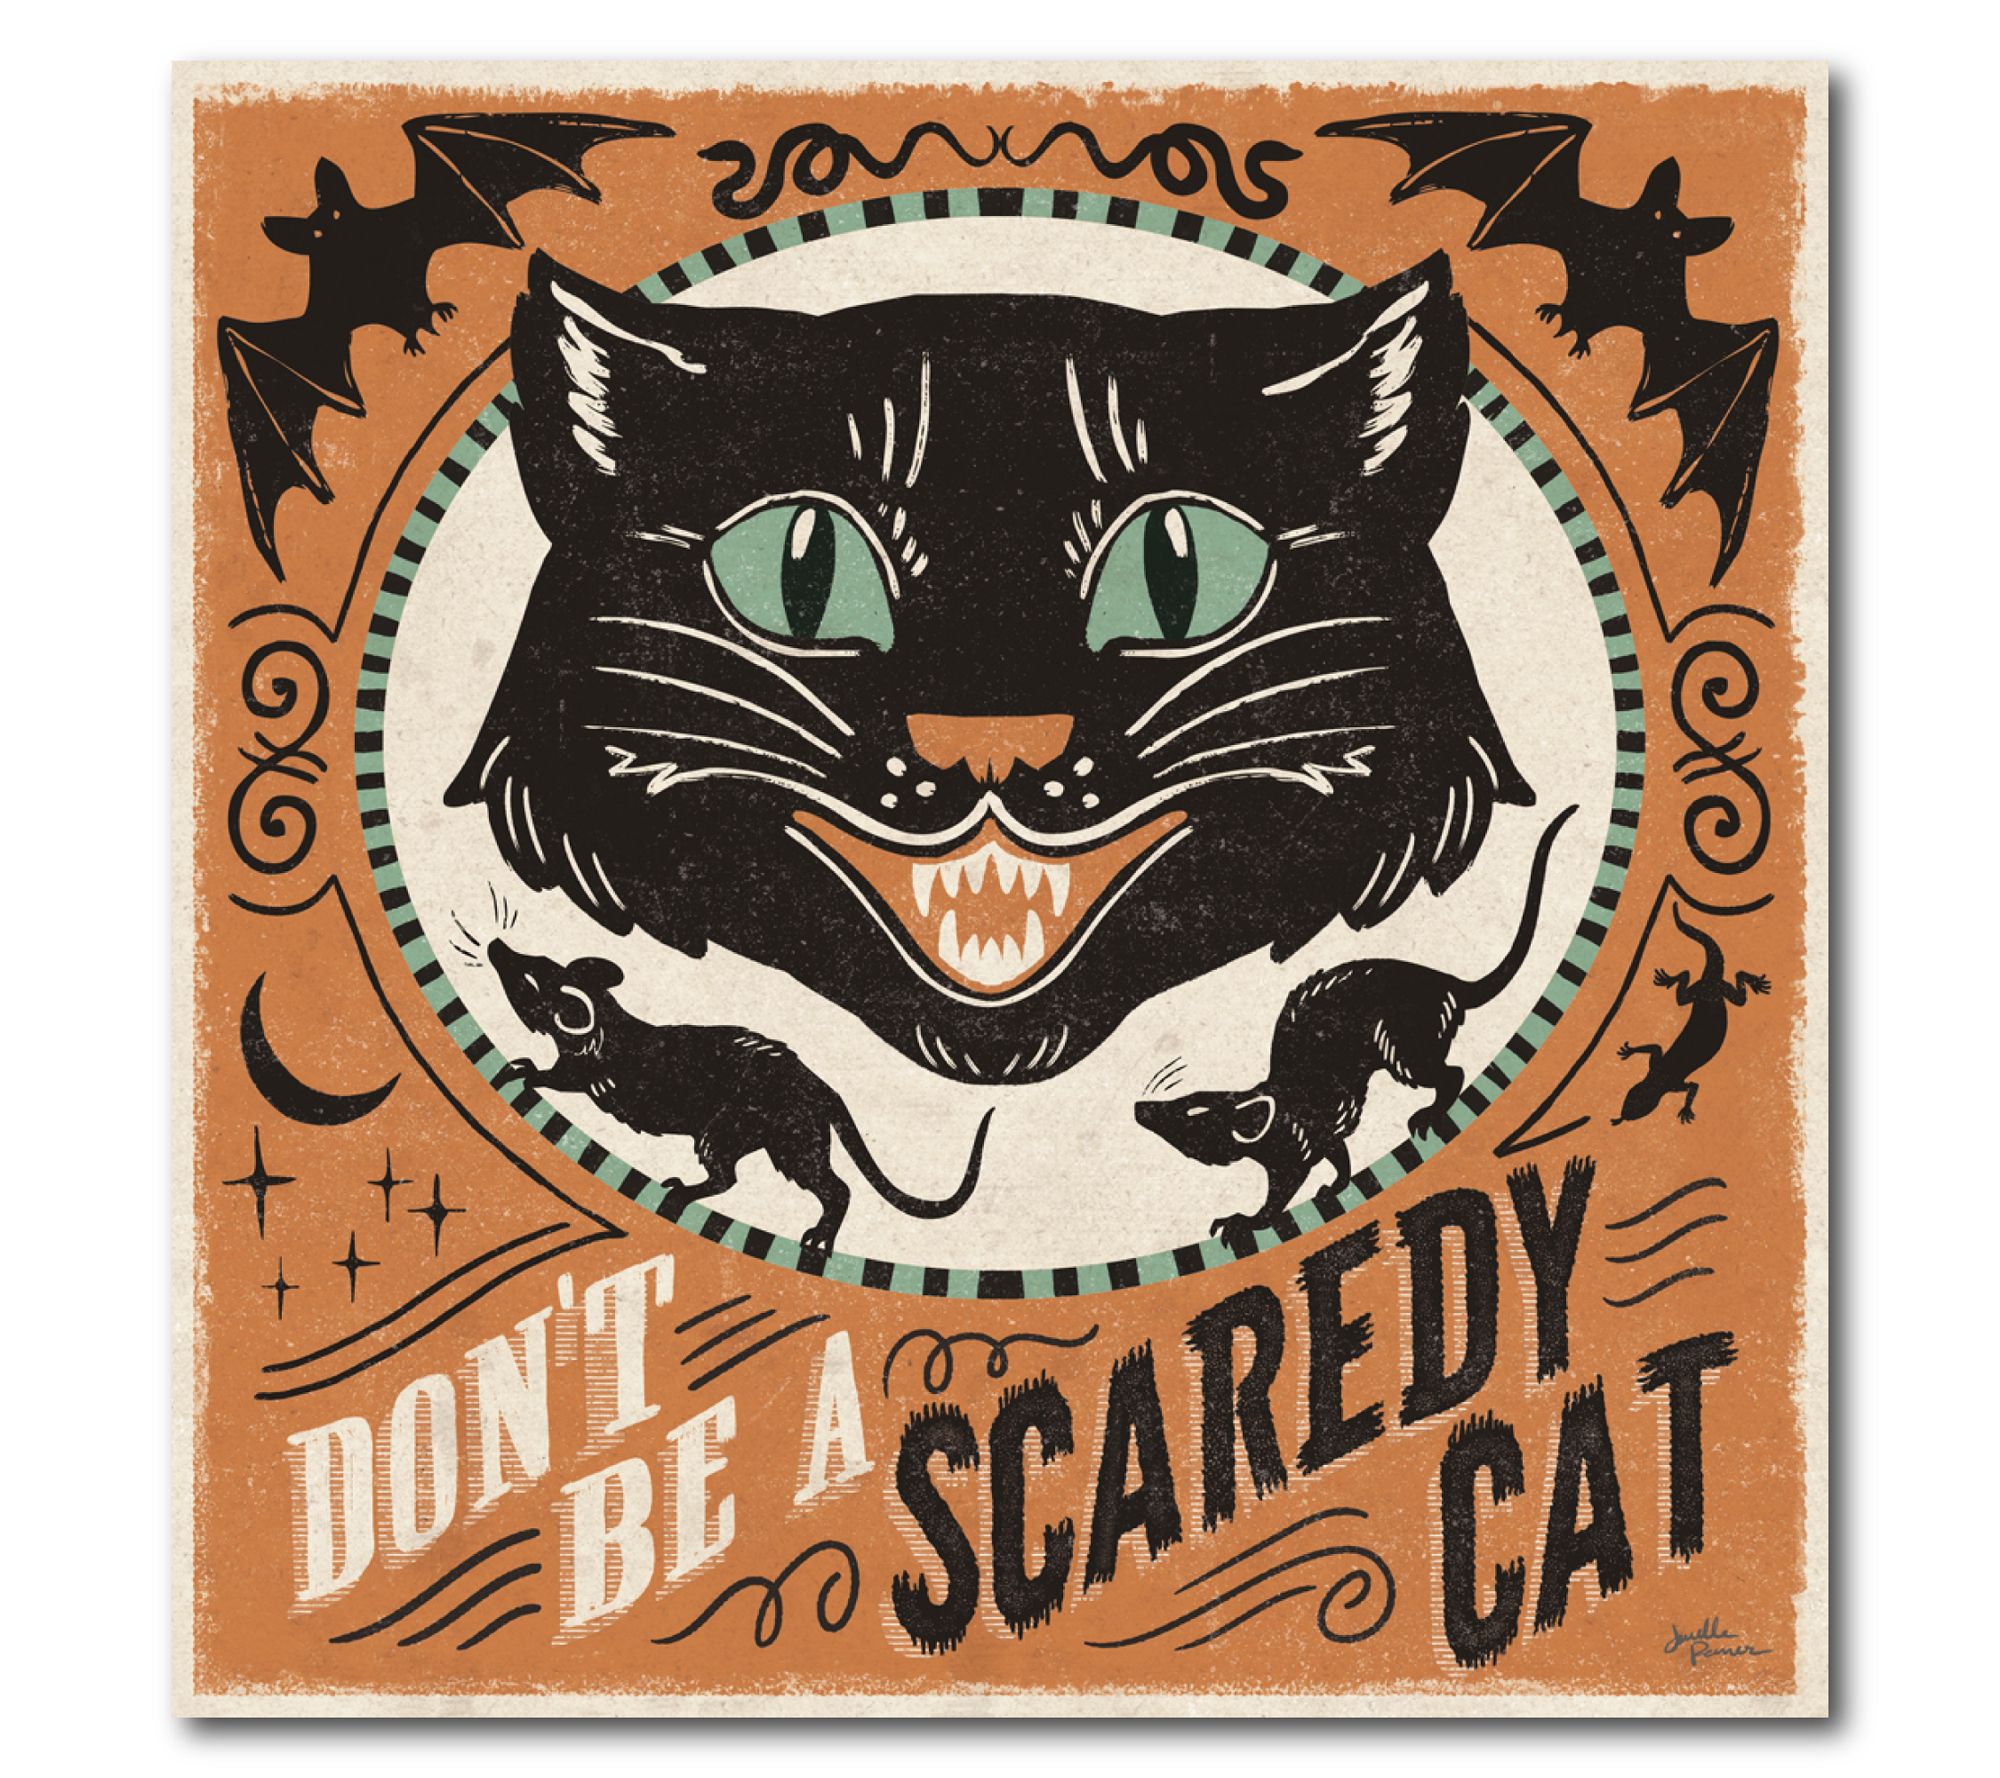 Scaredy Cats – Holiday House